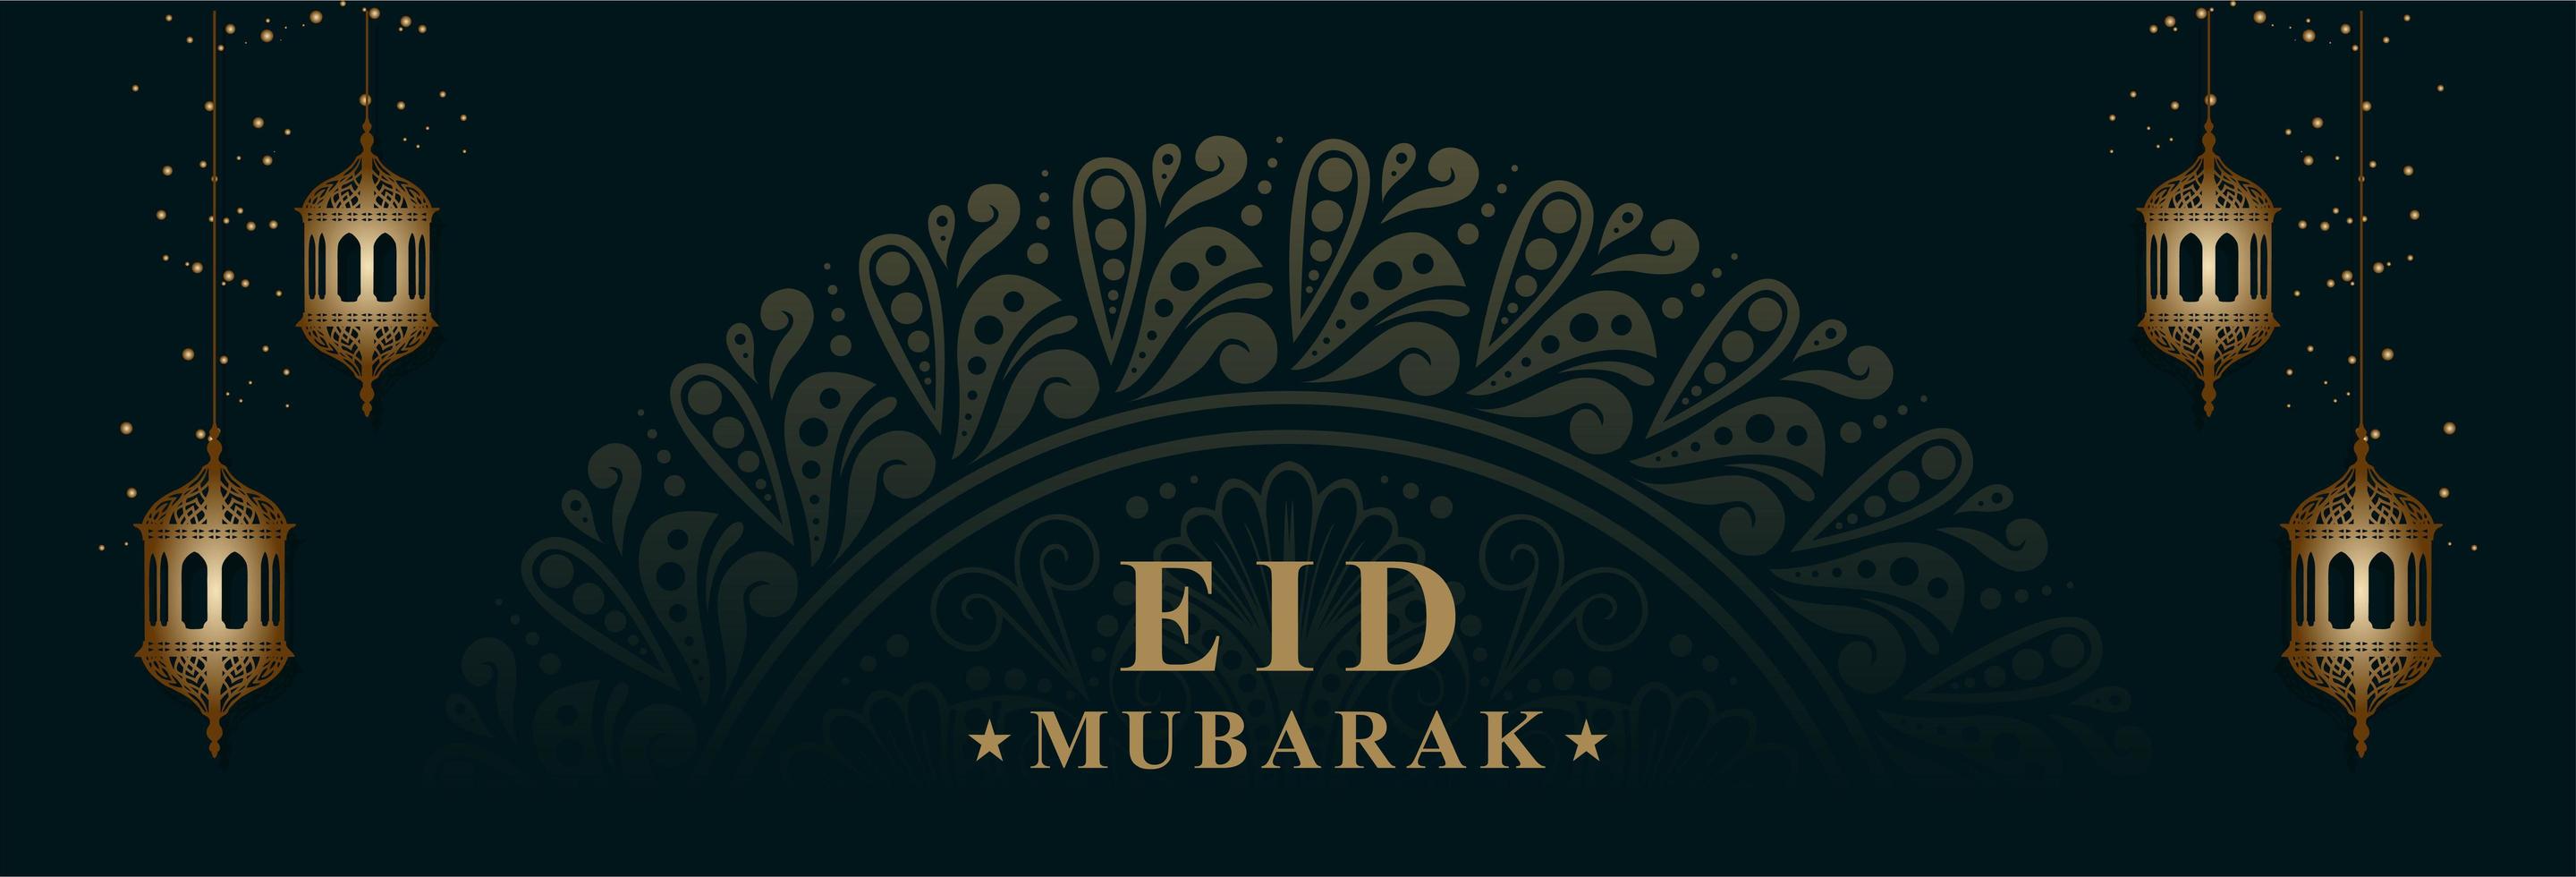 banner de eid mubarak con linternas doradas vector